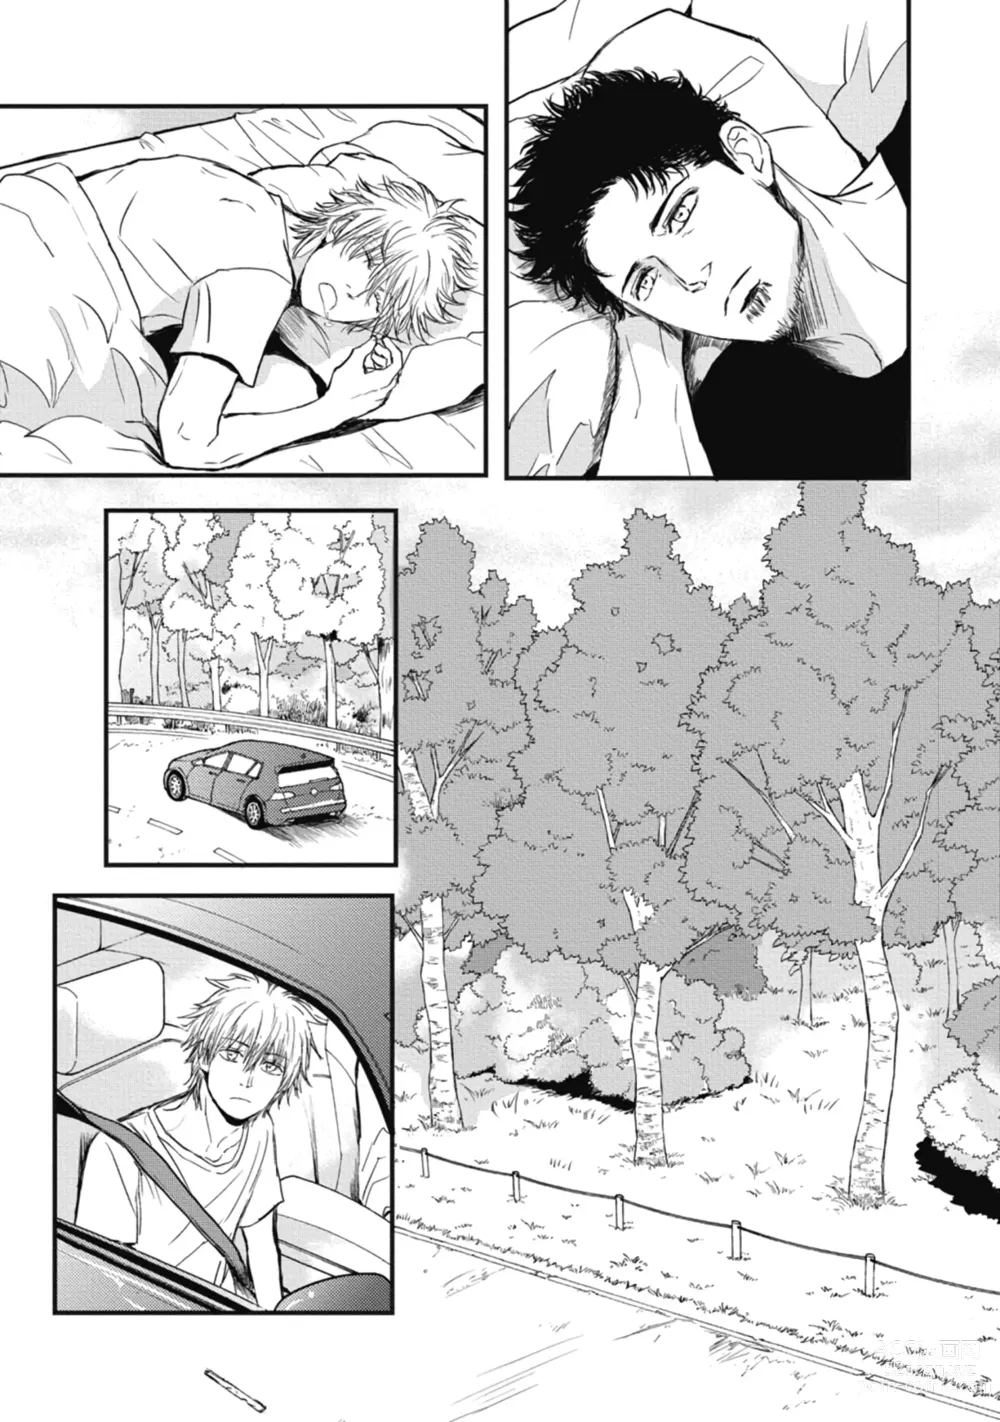 Page 141 of manga Papas Assassin. ~Futari Shite Tonde Yuku.~